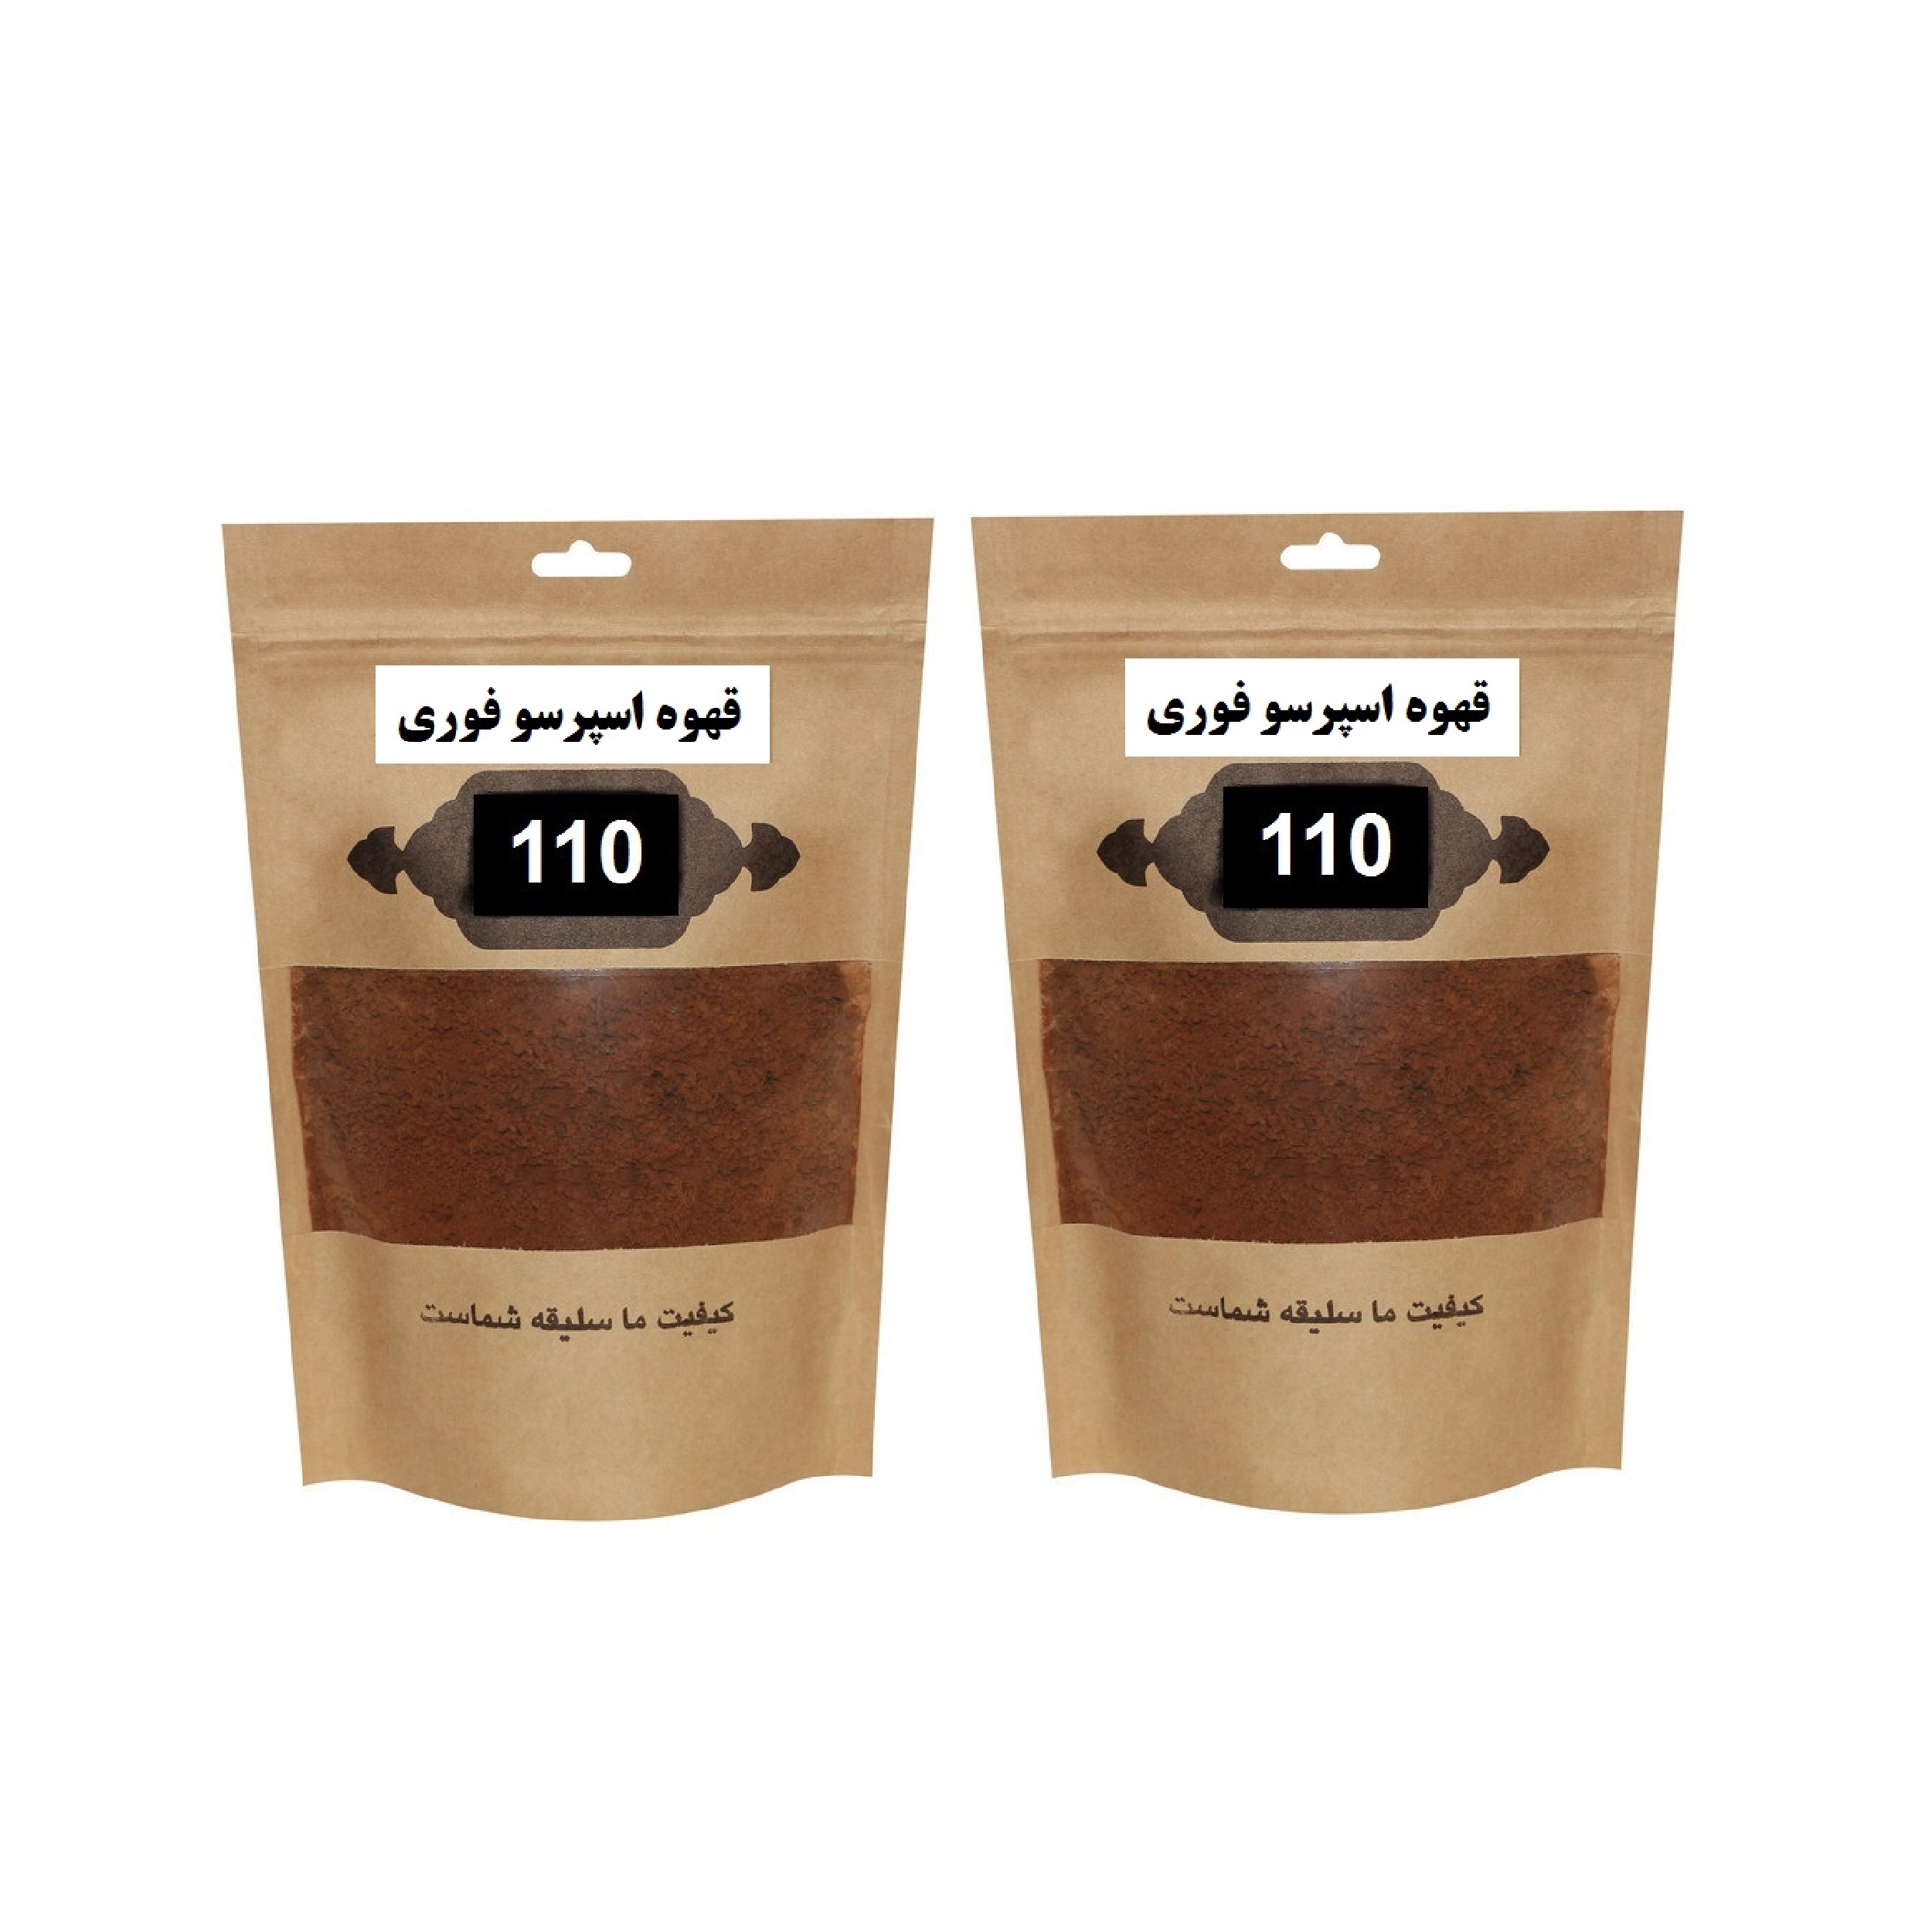 قهوه اسپرسو فوری 110 - 25 گرم بسته 2 عددی